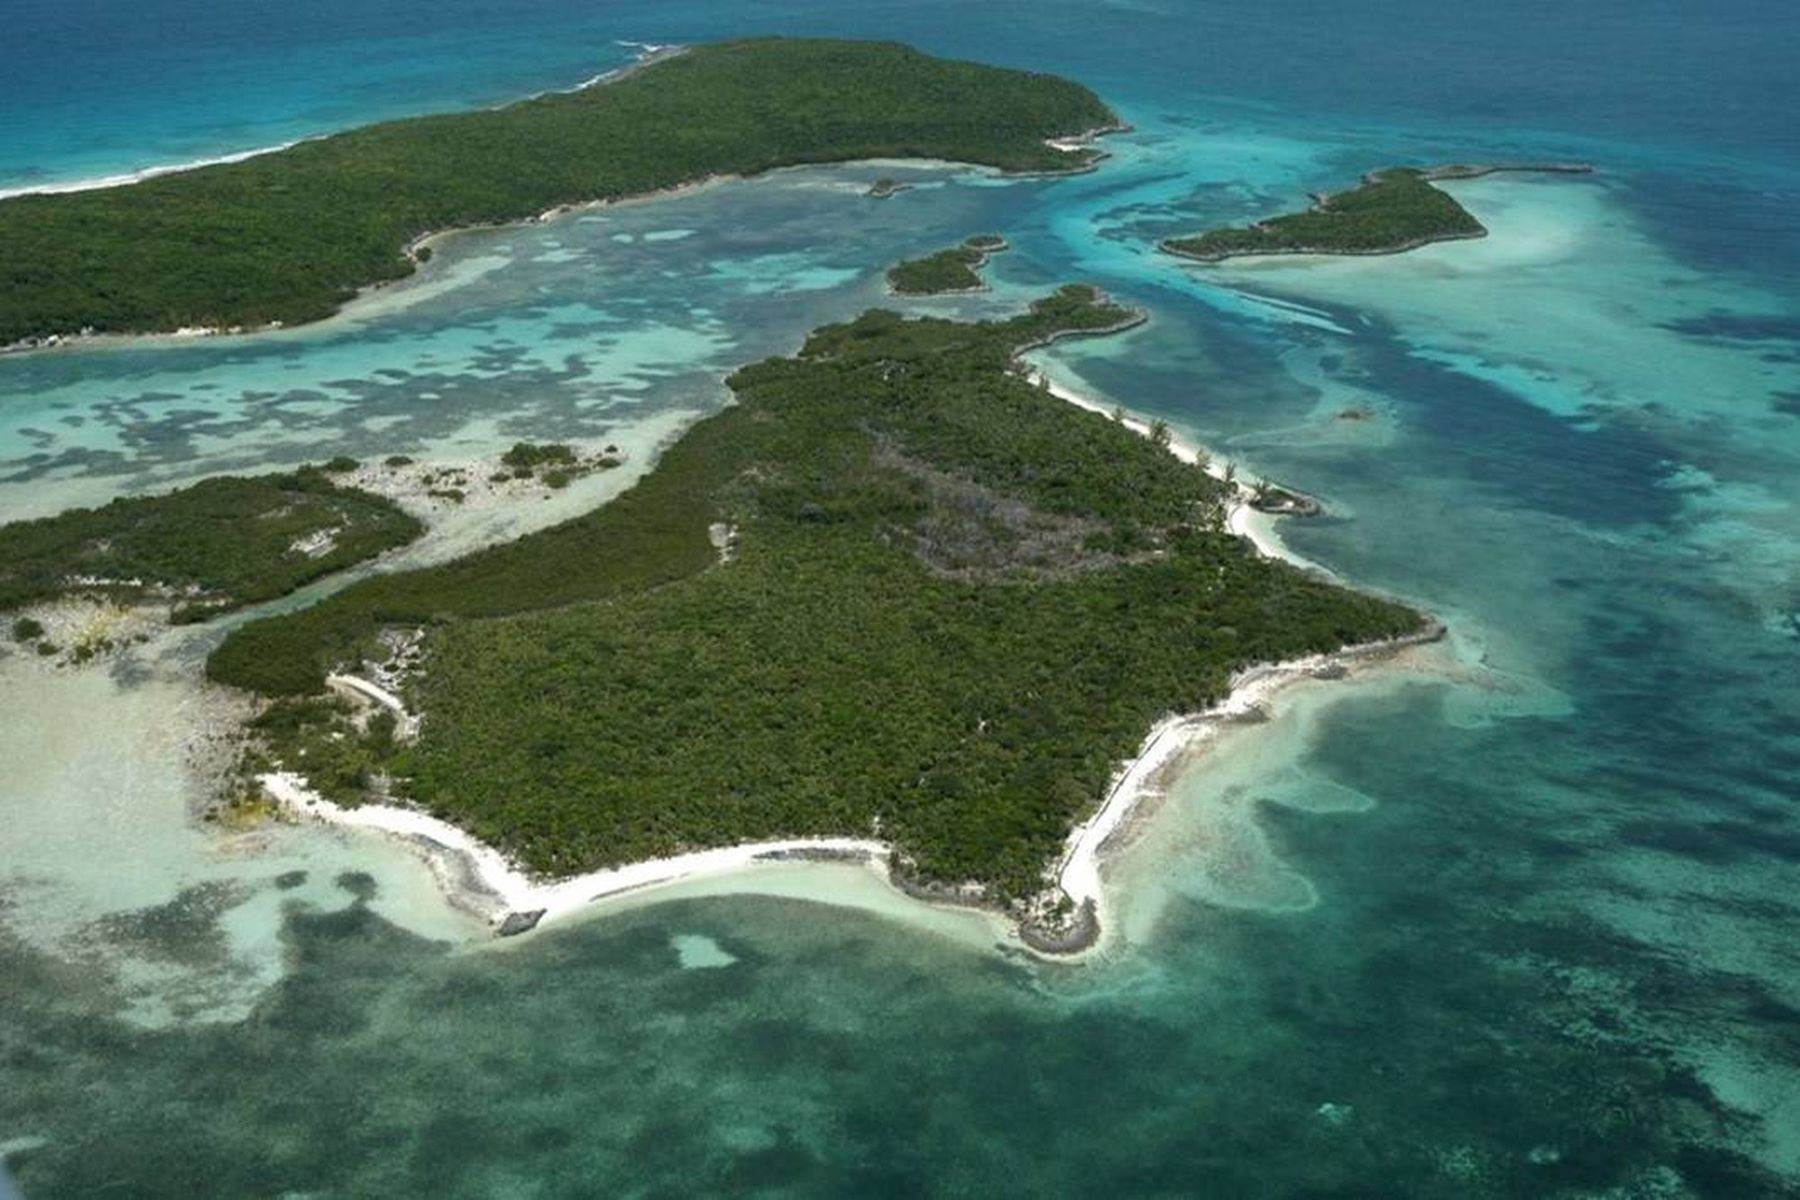 Private Islands для того Продажа на Sand Dollar Cay 24 Acres Berry Islands, Берри (Острова) Багамские о-ва